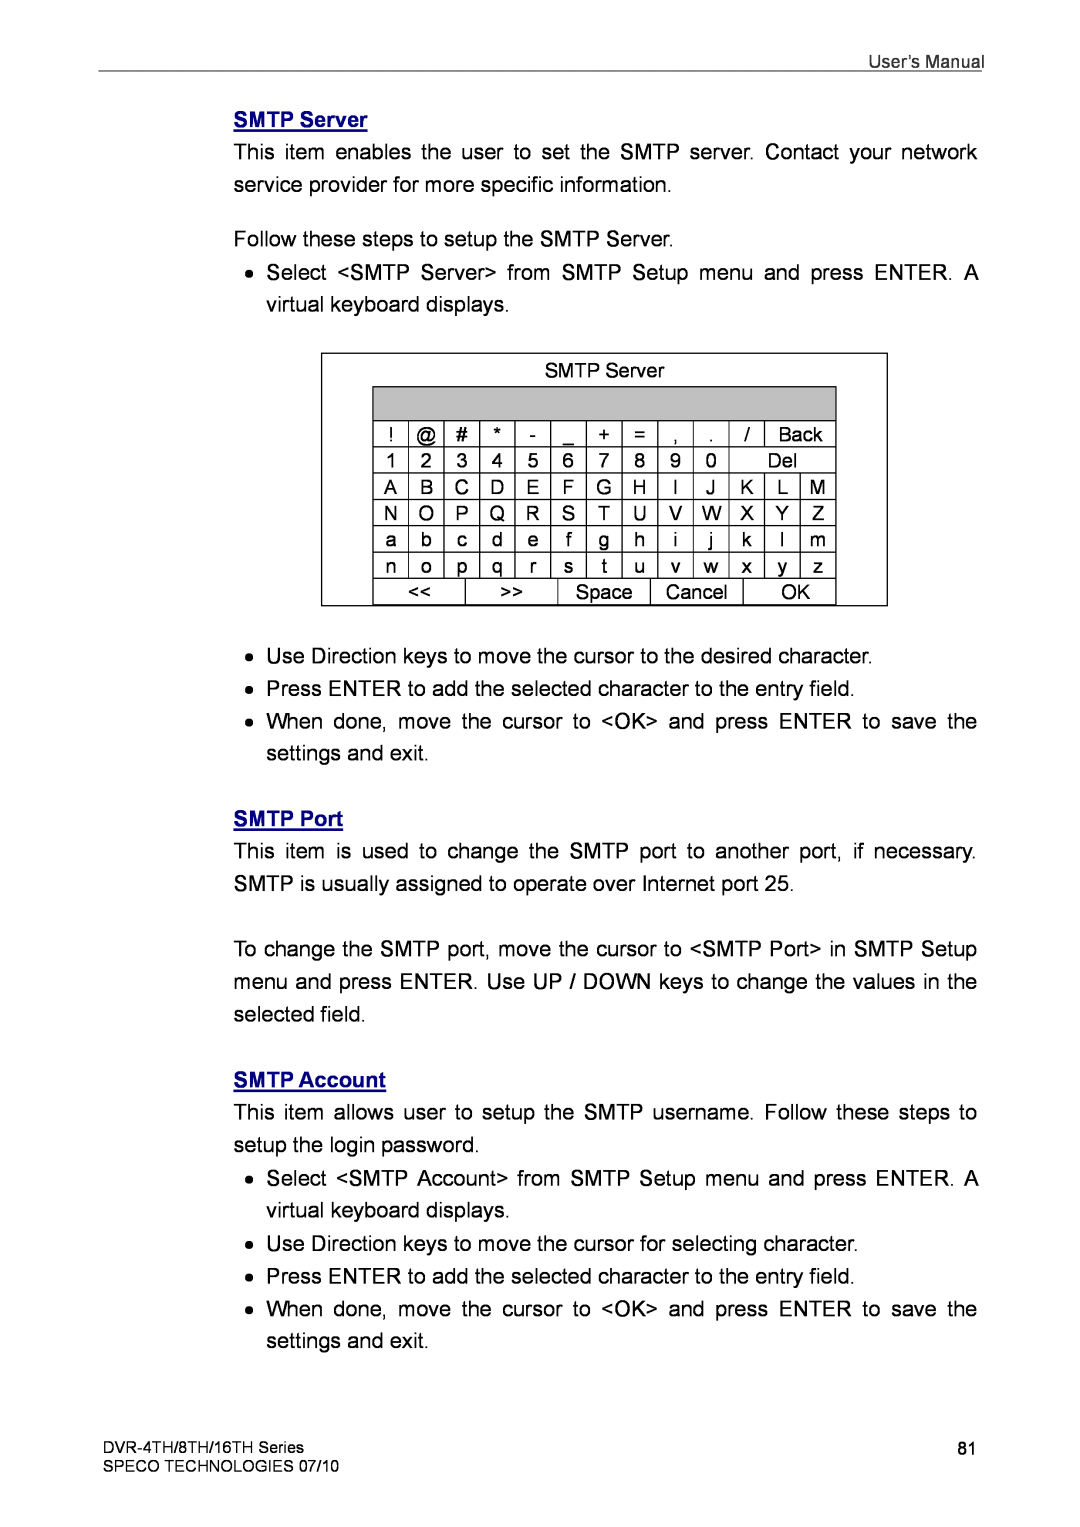 Speco Technologies 4TH, 8TH, 16TH user manual SMTP Server, SMTP Port, SMTP Account 